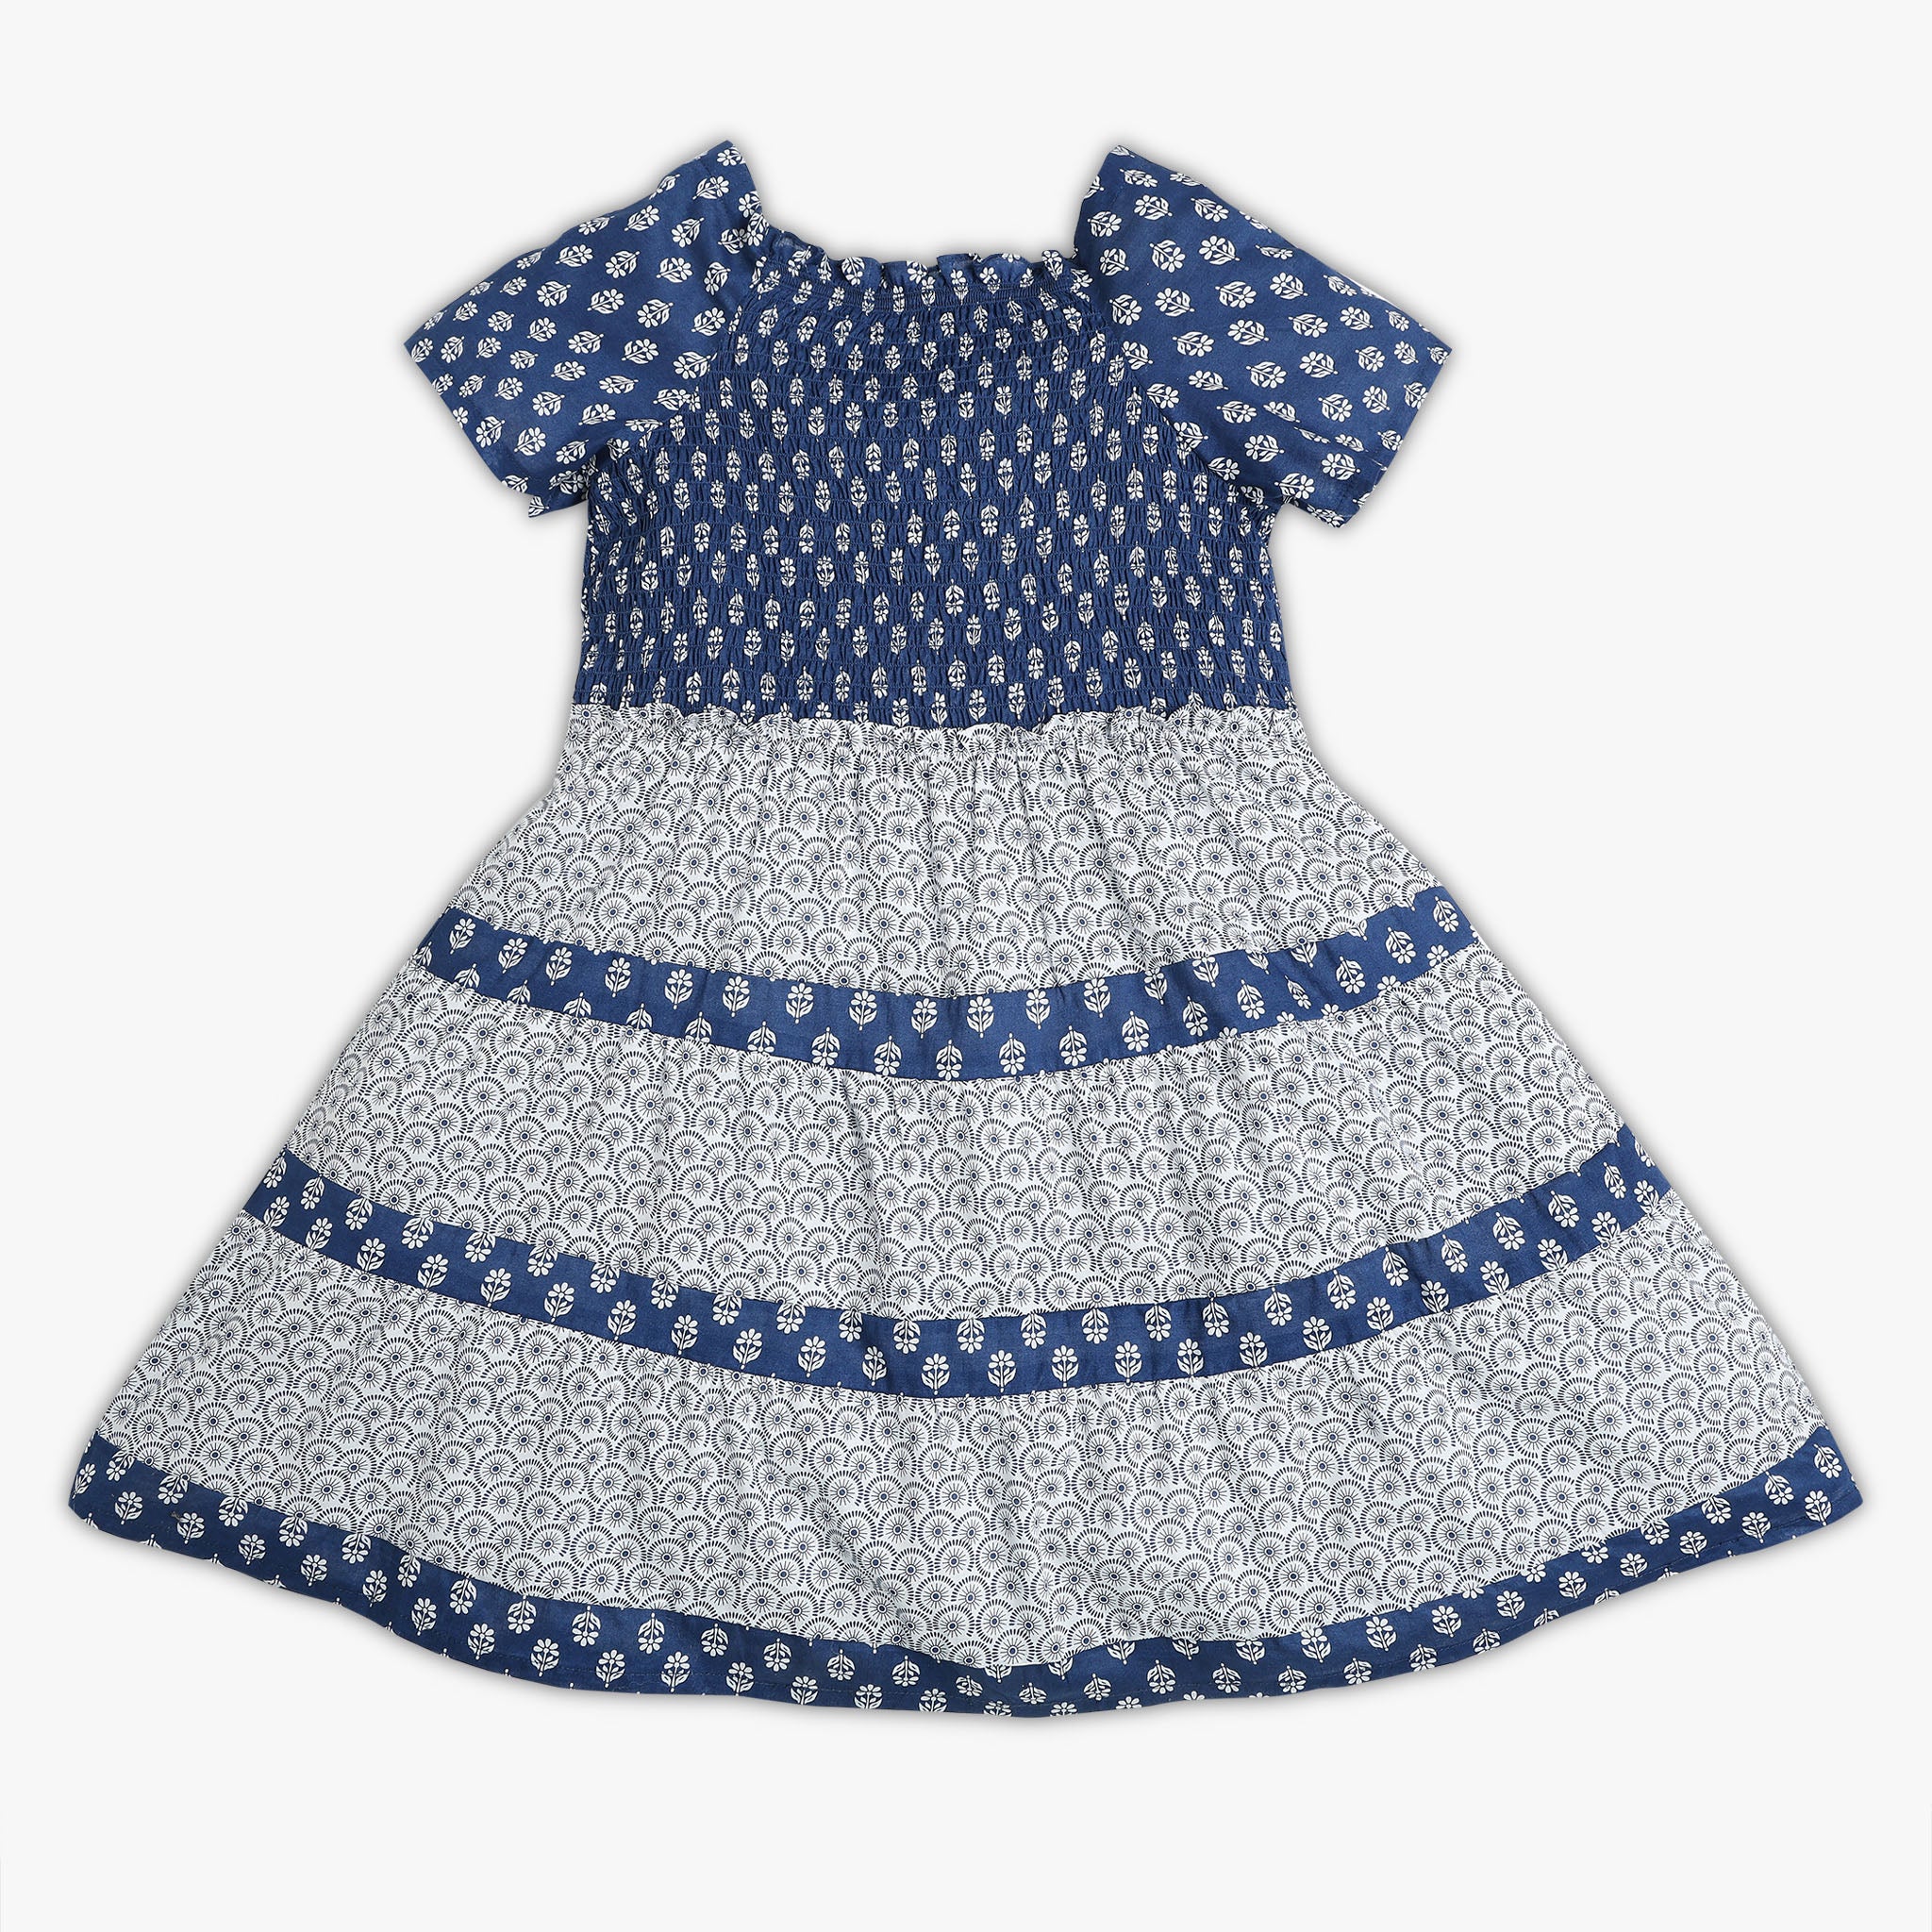 Handmade crochet baby frock 3M New born Girl Frock shoe Green Knit Dress  set New | eBay